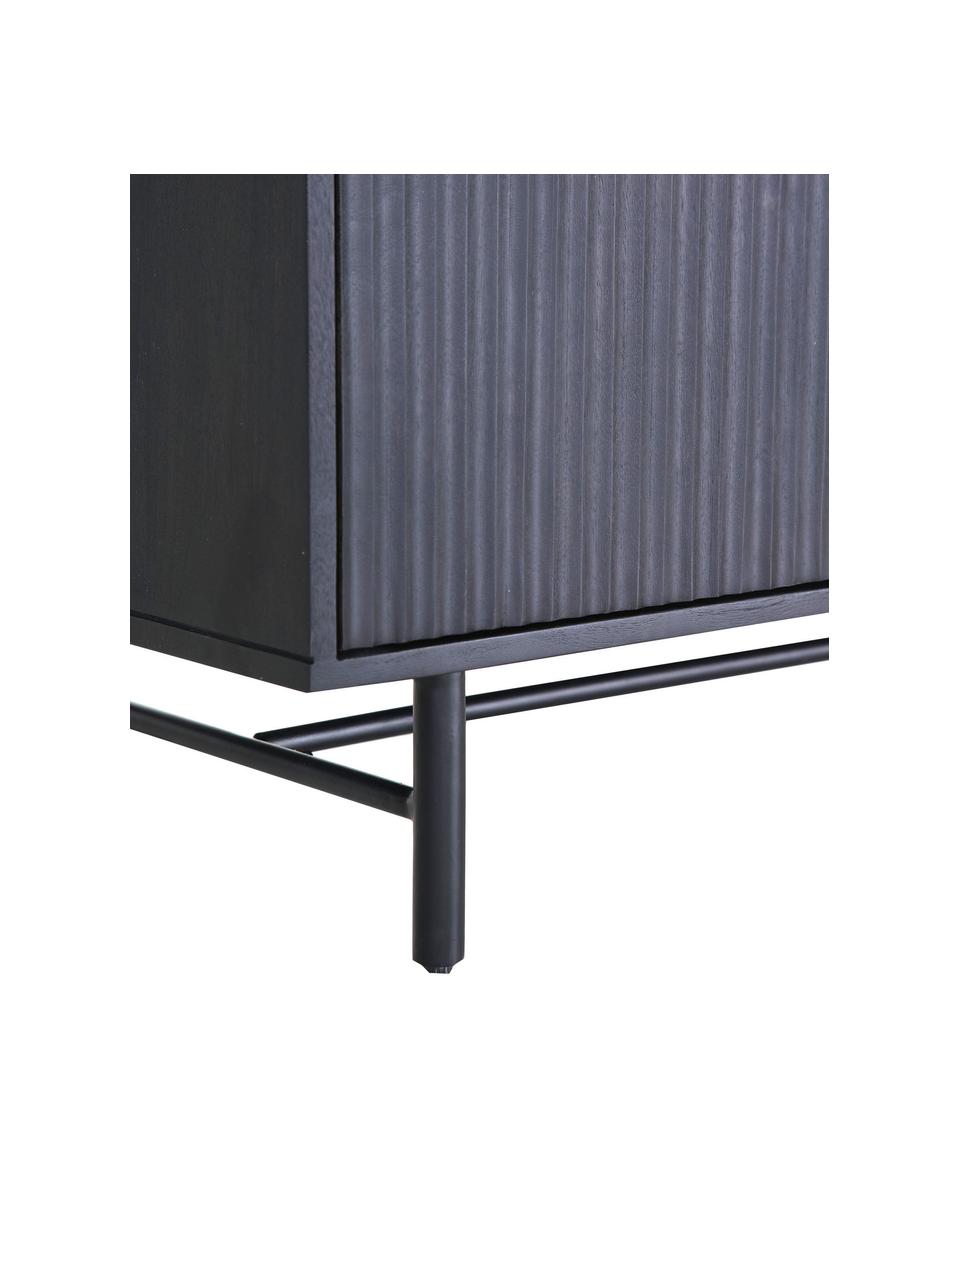 Akazienholz-Sideboard Mamba mit geriffelter Front, Korpus: Akazienholz, lackiert, Beine: Metall, lackiert, Schwarz, 175 x 77 cm